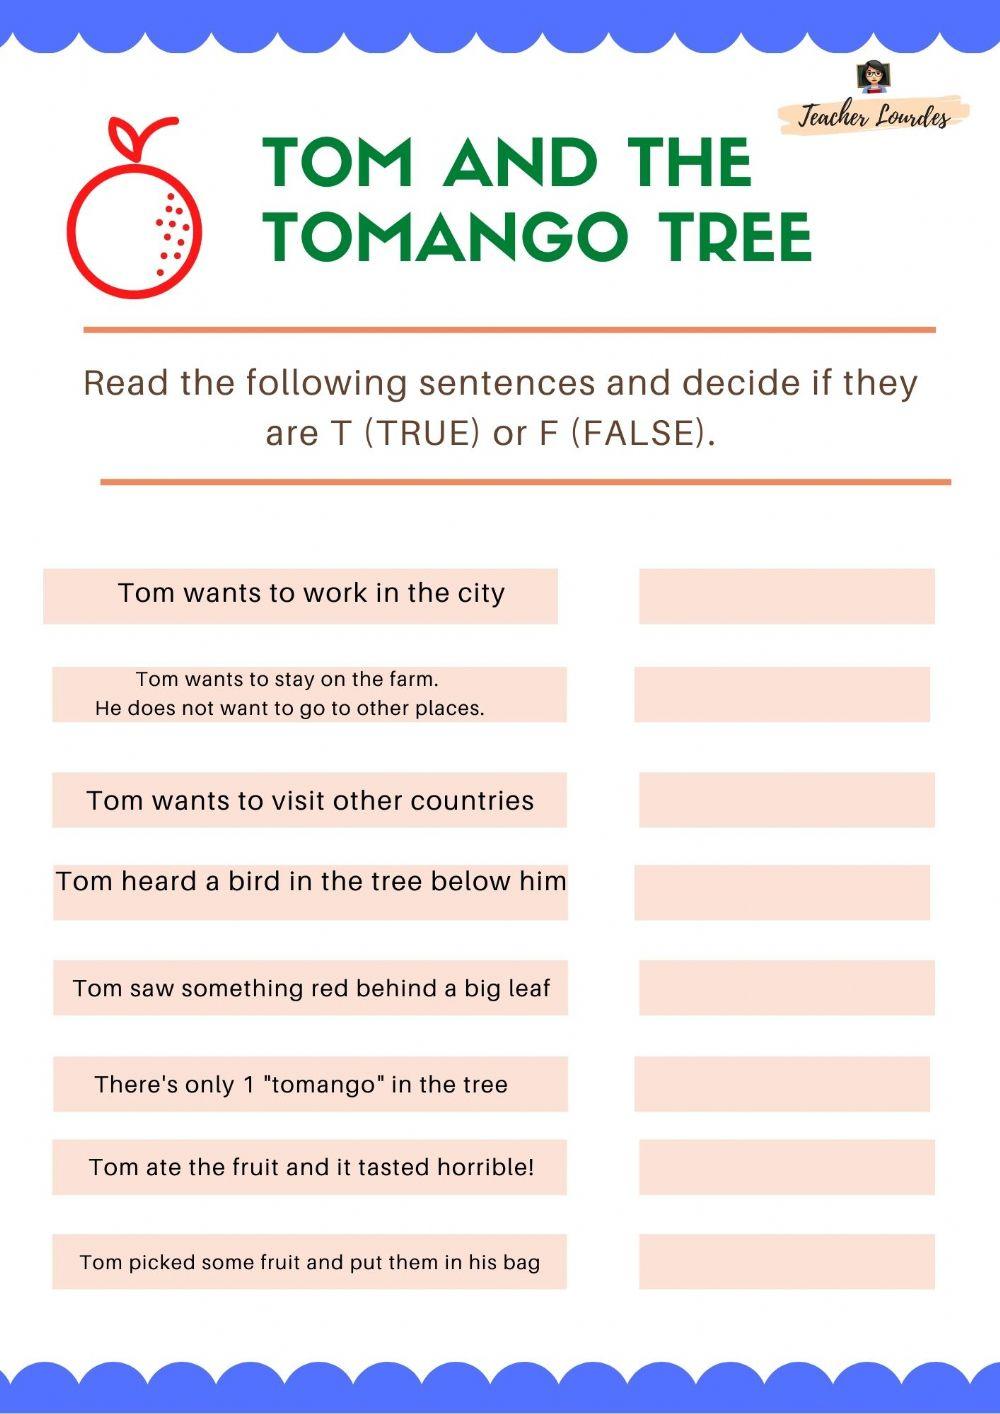 Tom and the tomango tree